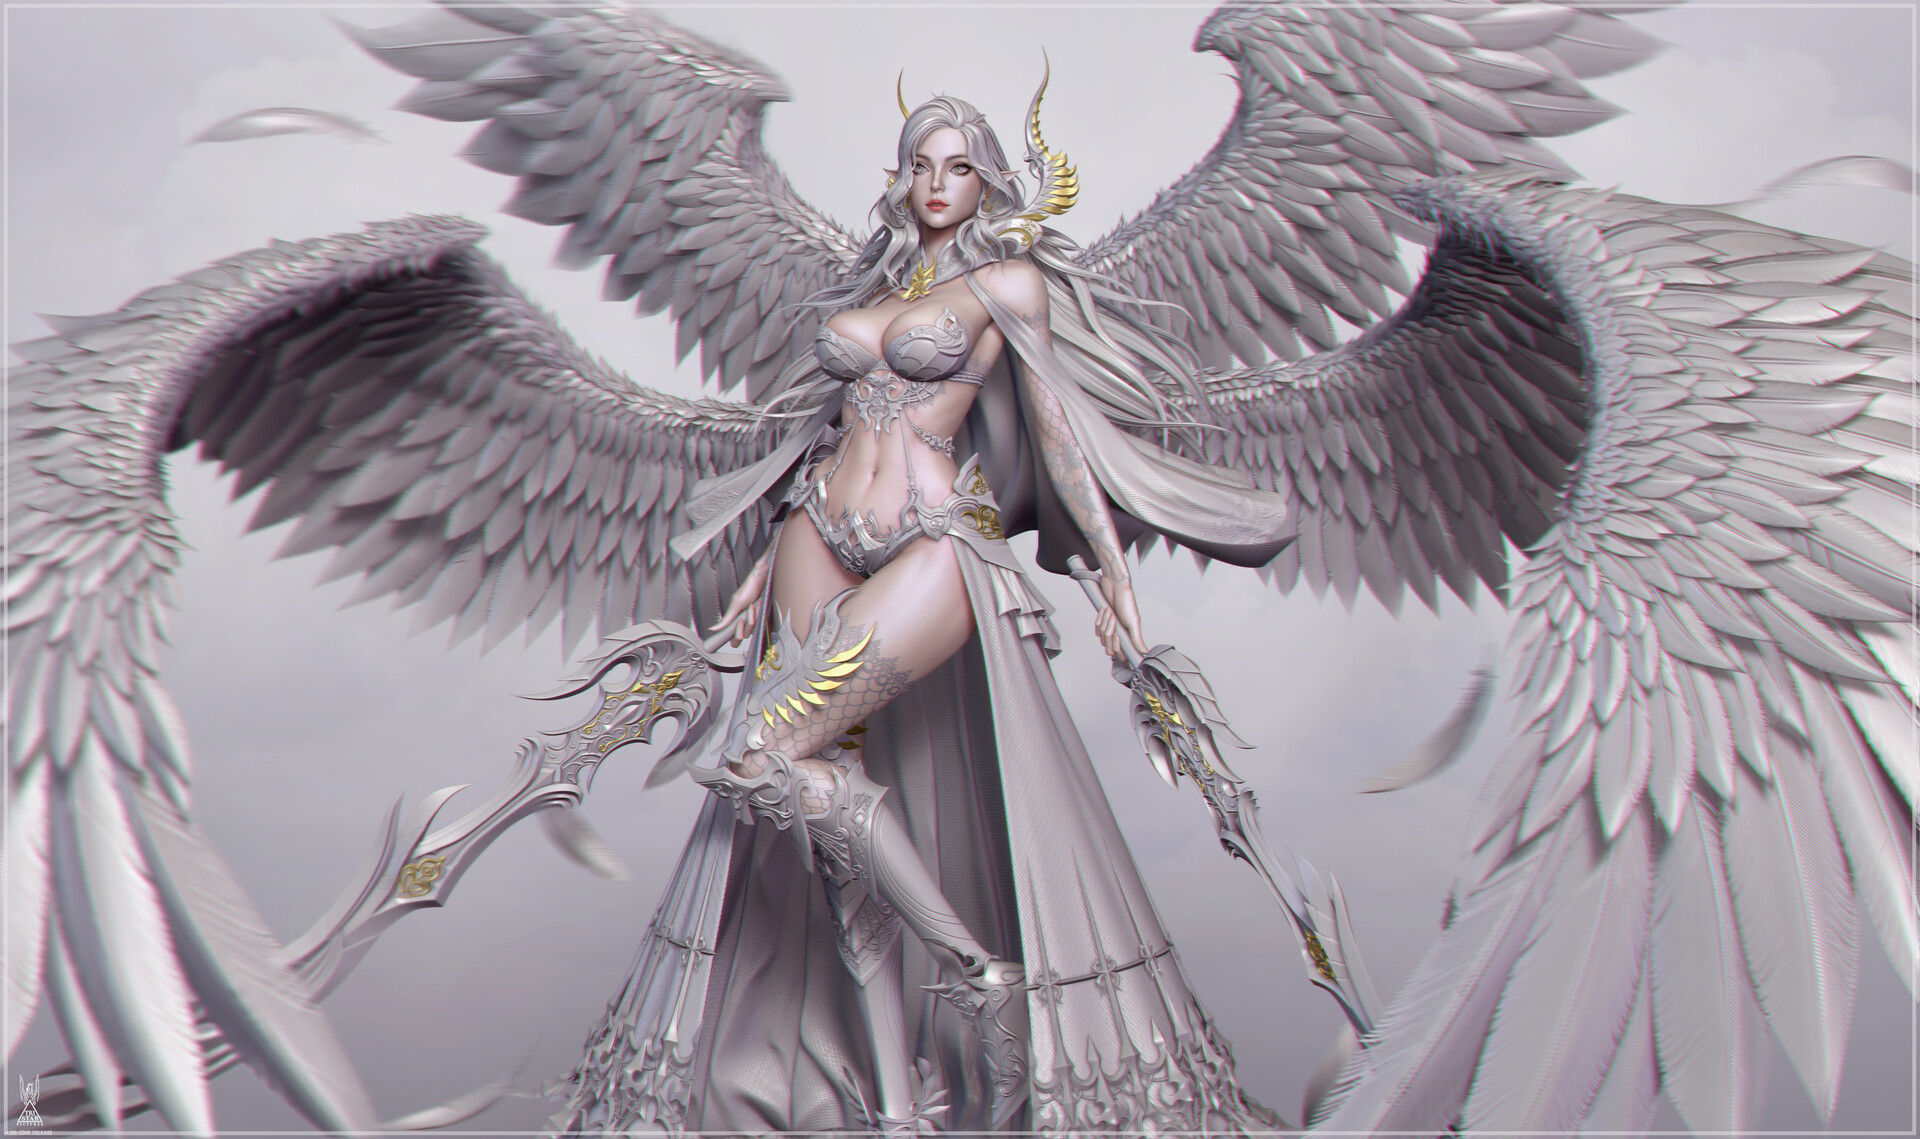 General 1920x1139 CGI women wings angel weapon sword armor skirt silver hair gold skimpy clothes cleavage bikini armor